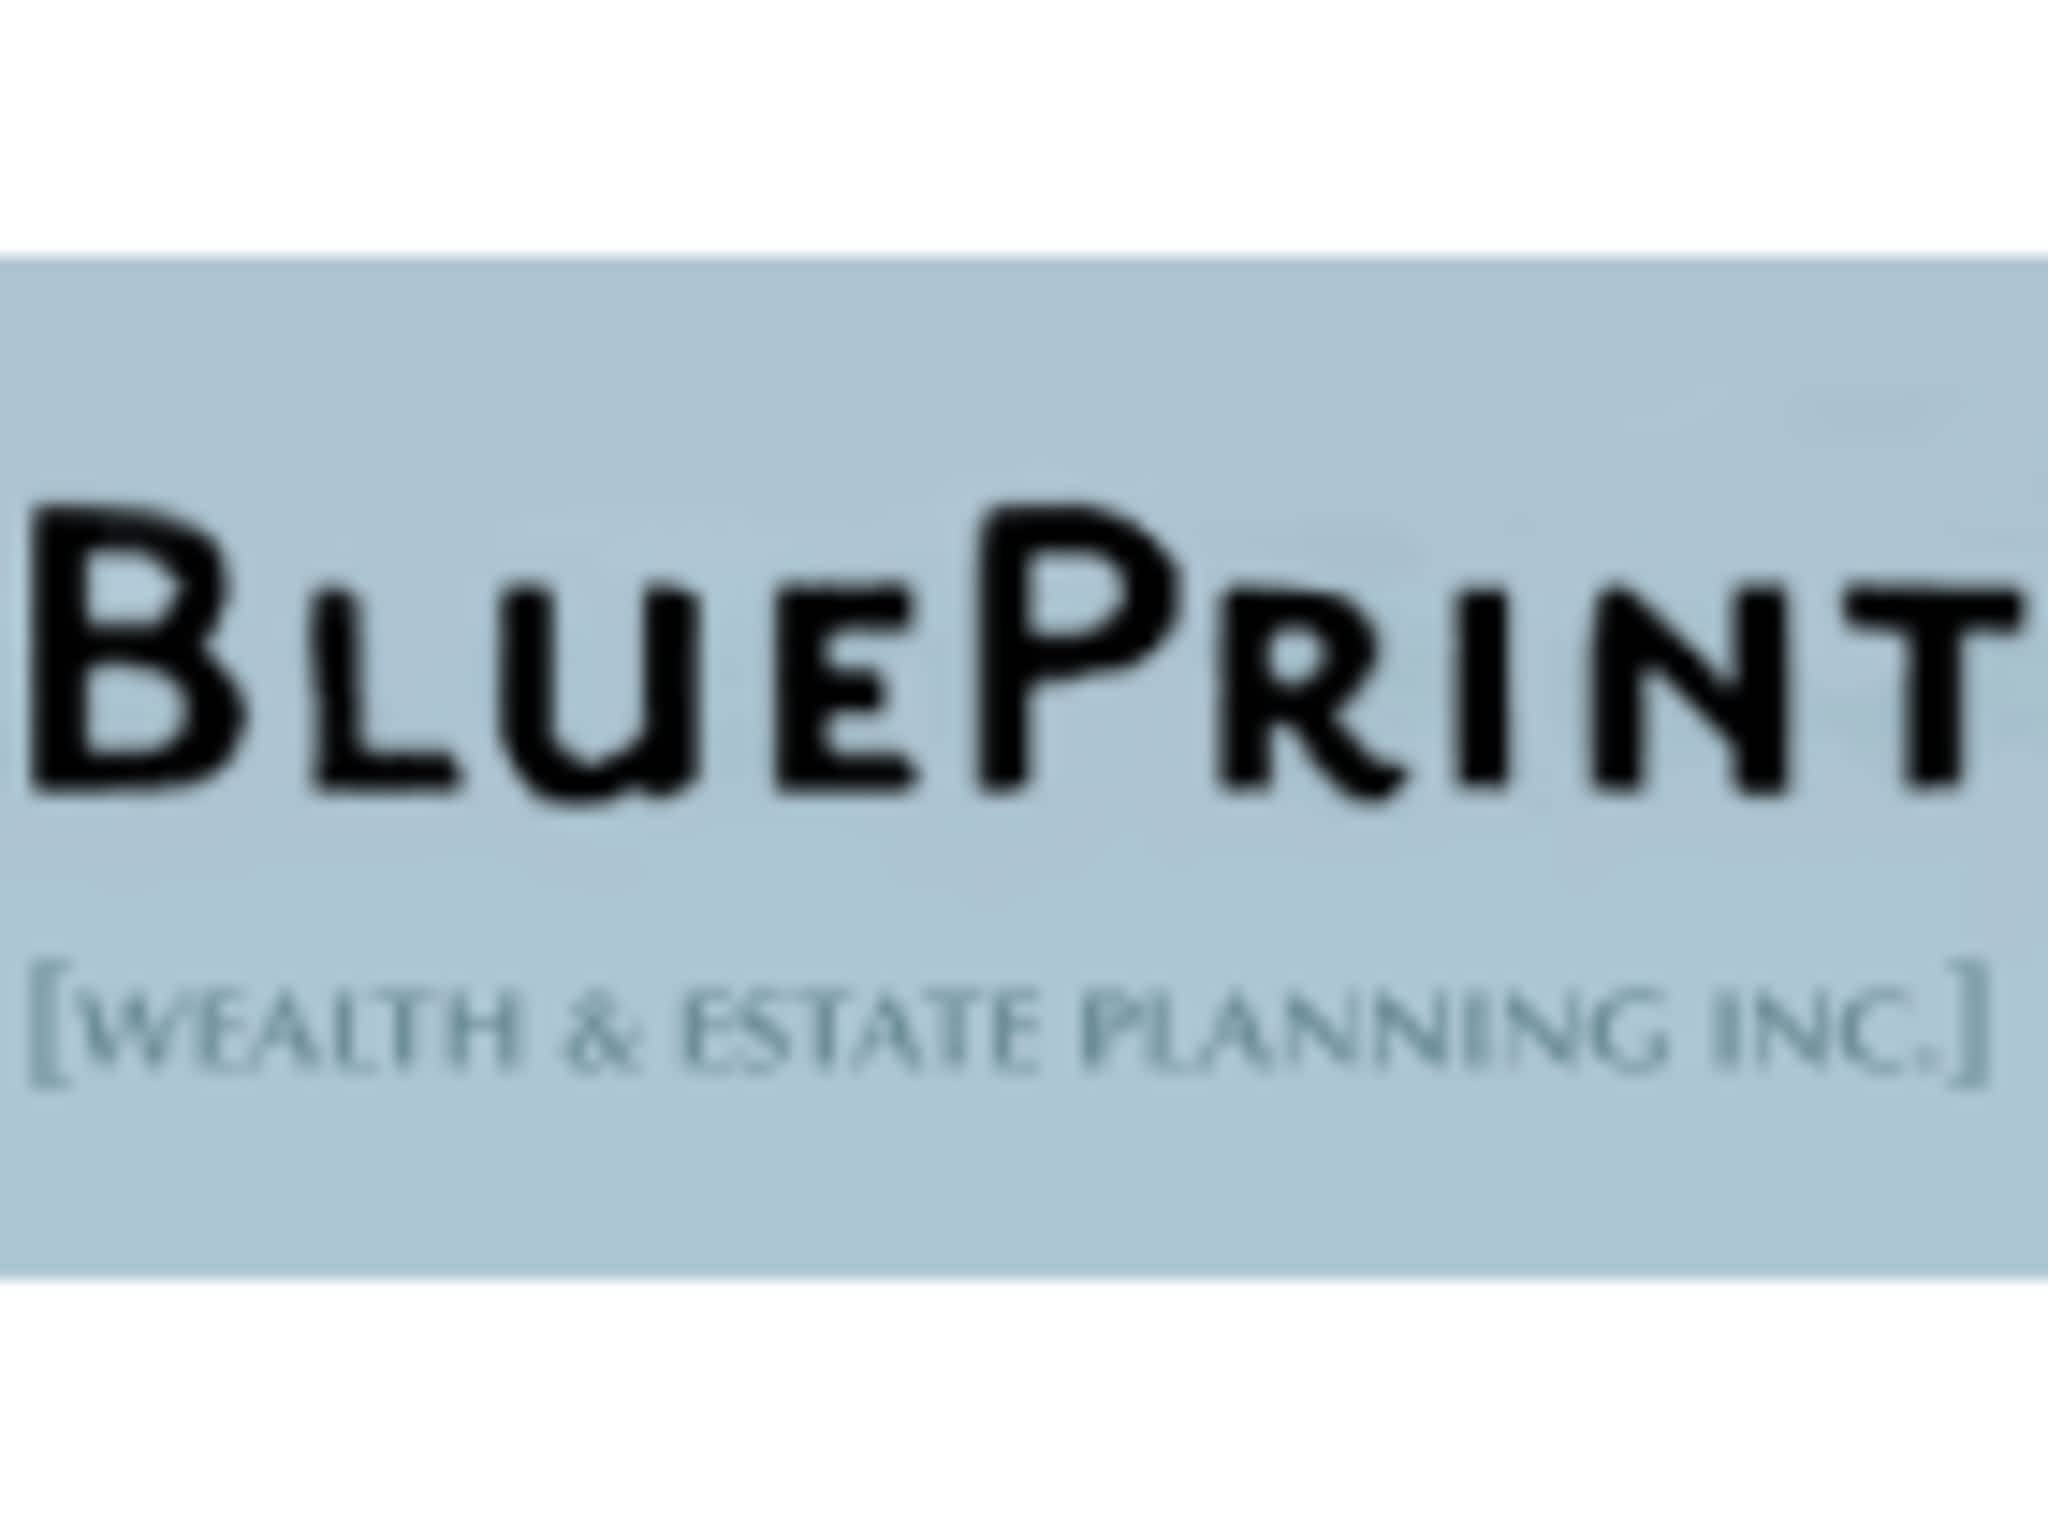 photo Blueprint Wealth & Estate Planning Inc